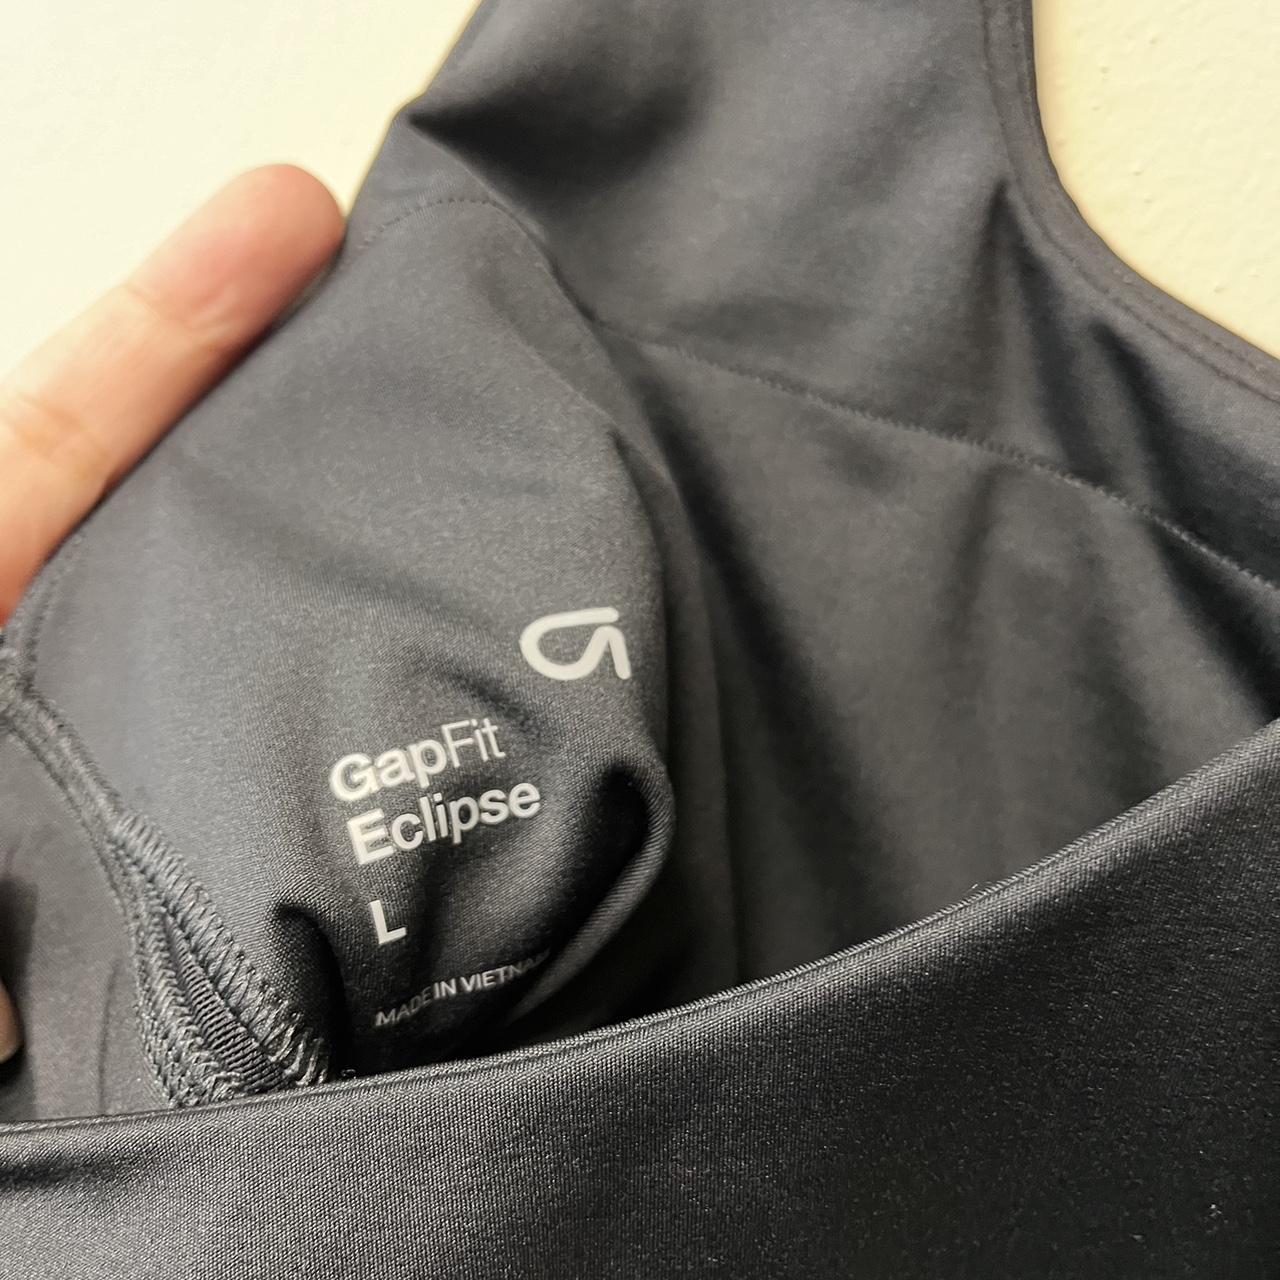 EUC Gapfit Eclipse sports bra, size large. Does have - Depop